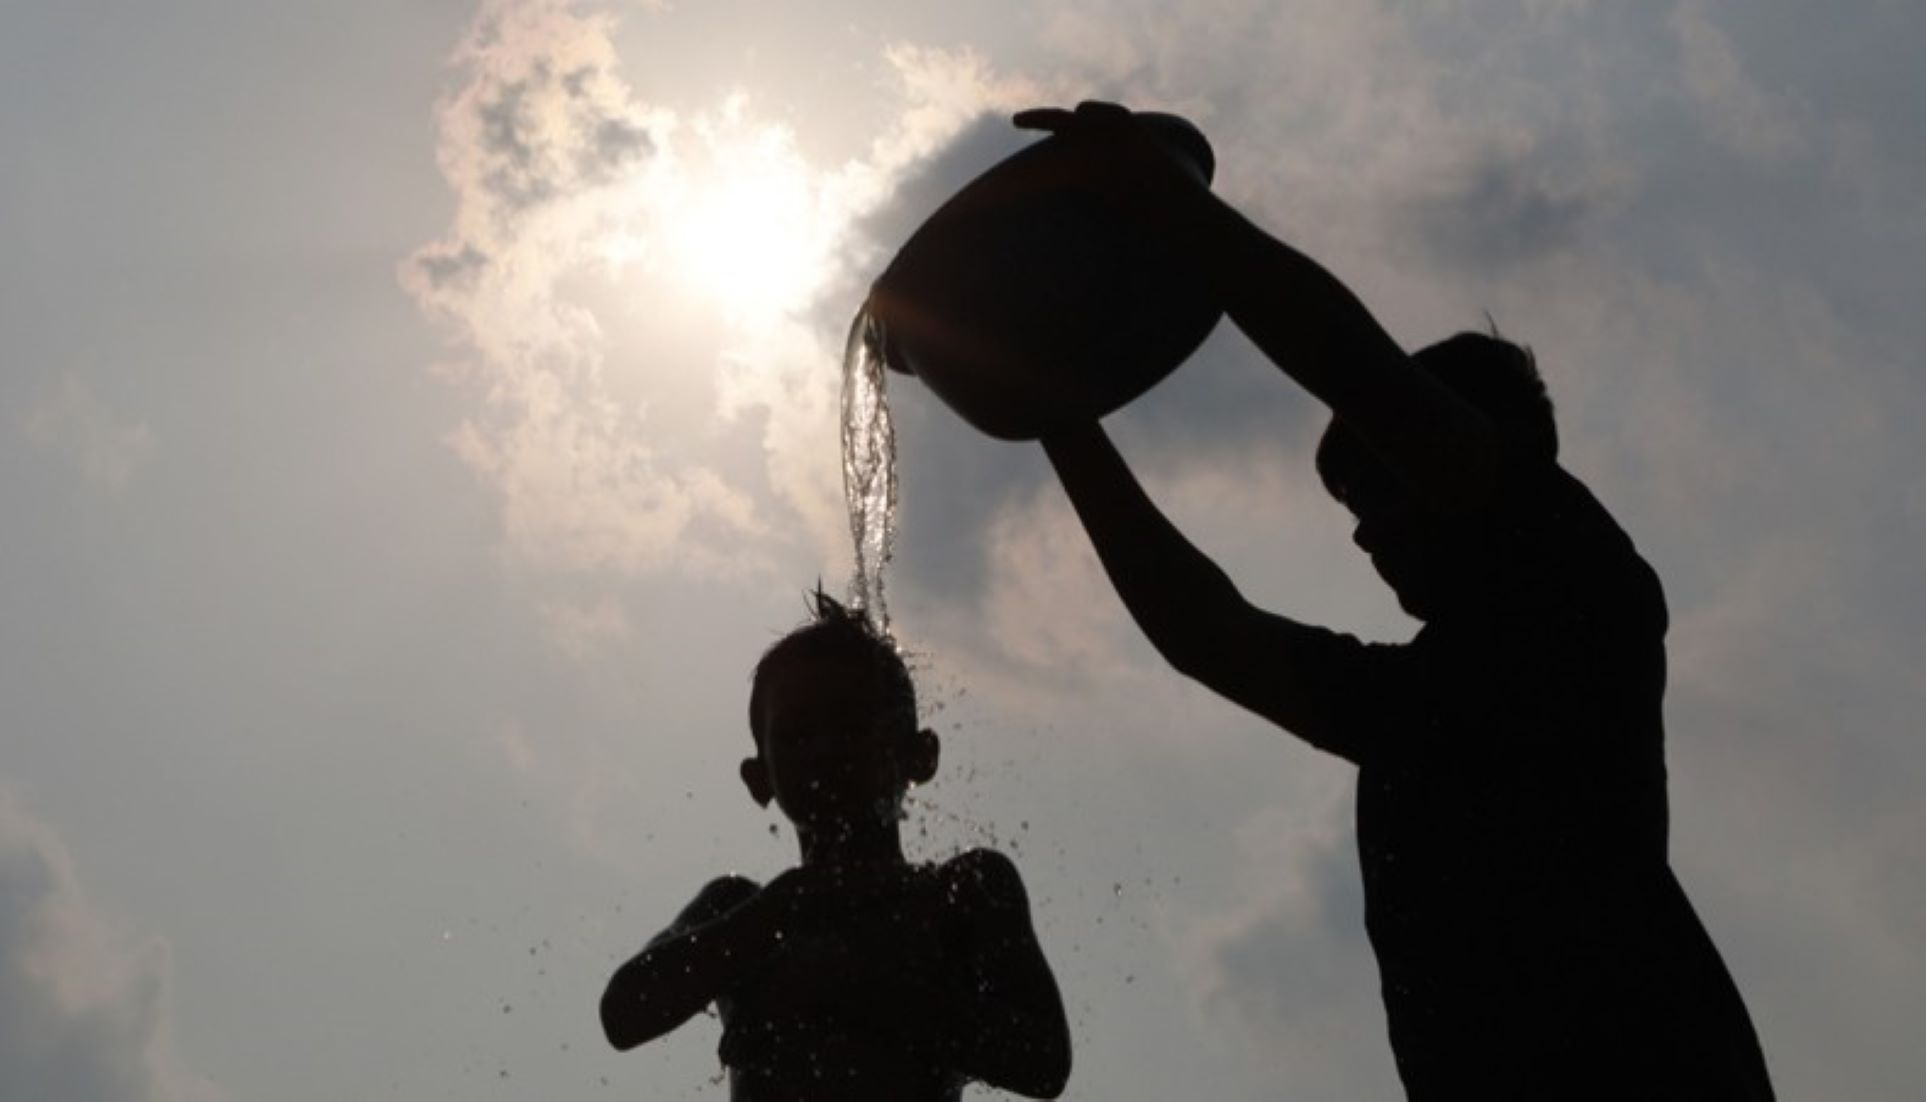 Bangladesh’s gov’t primary schools temporarily closed for heatwave